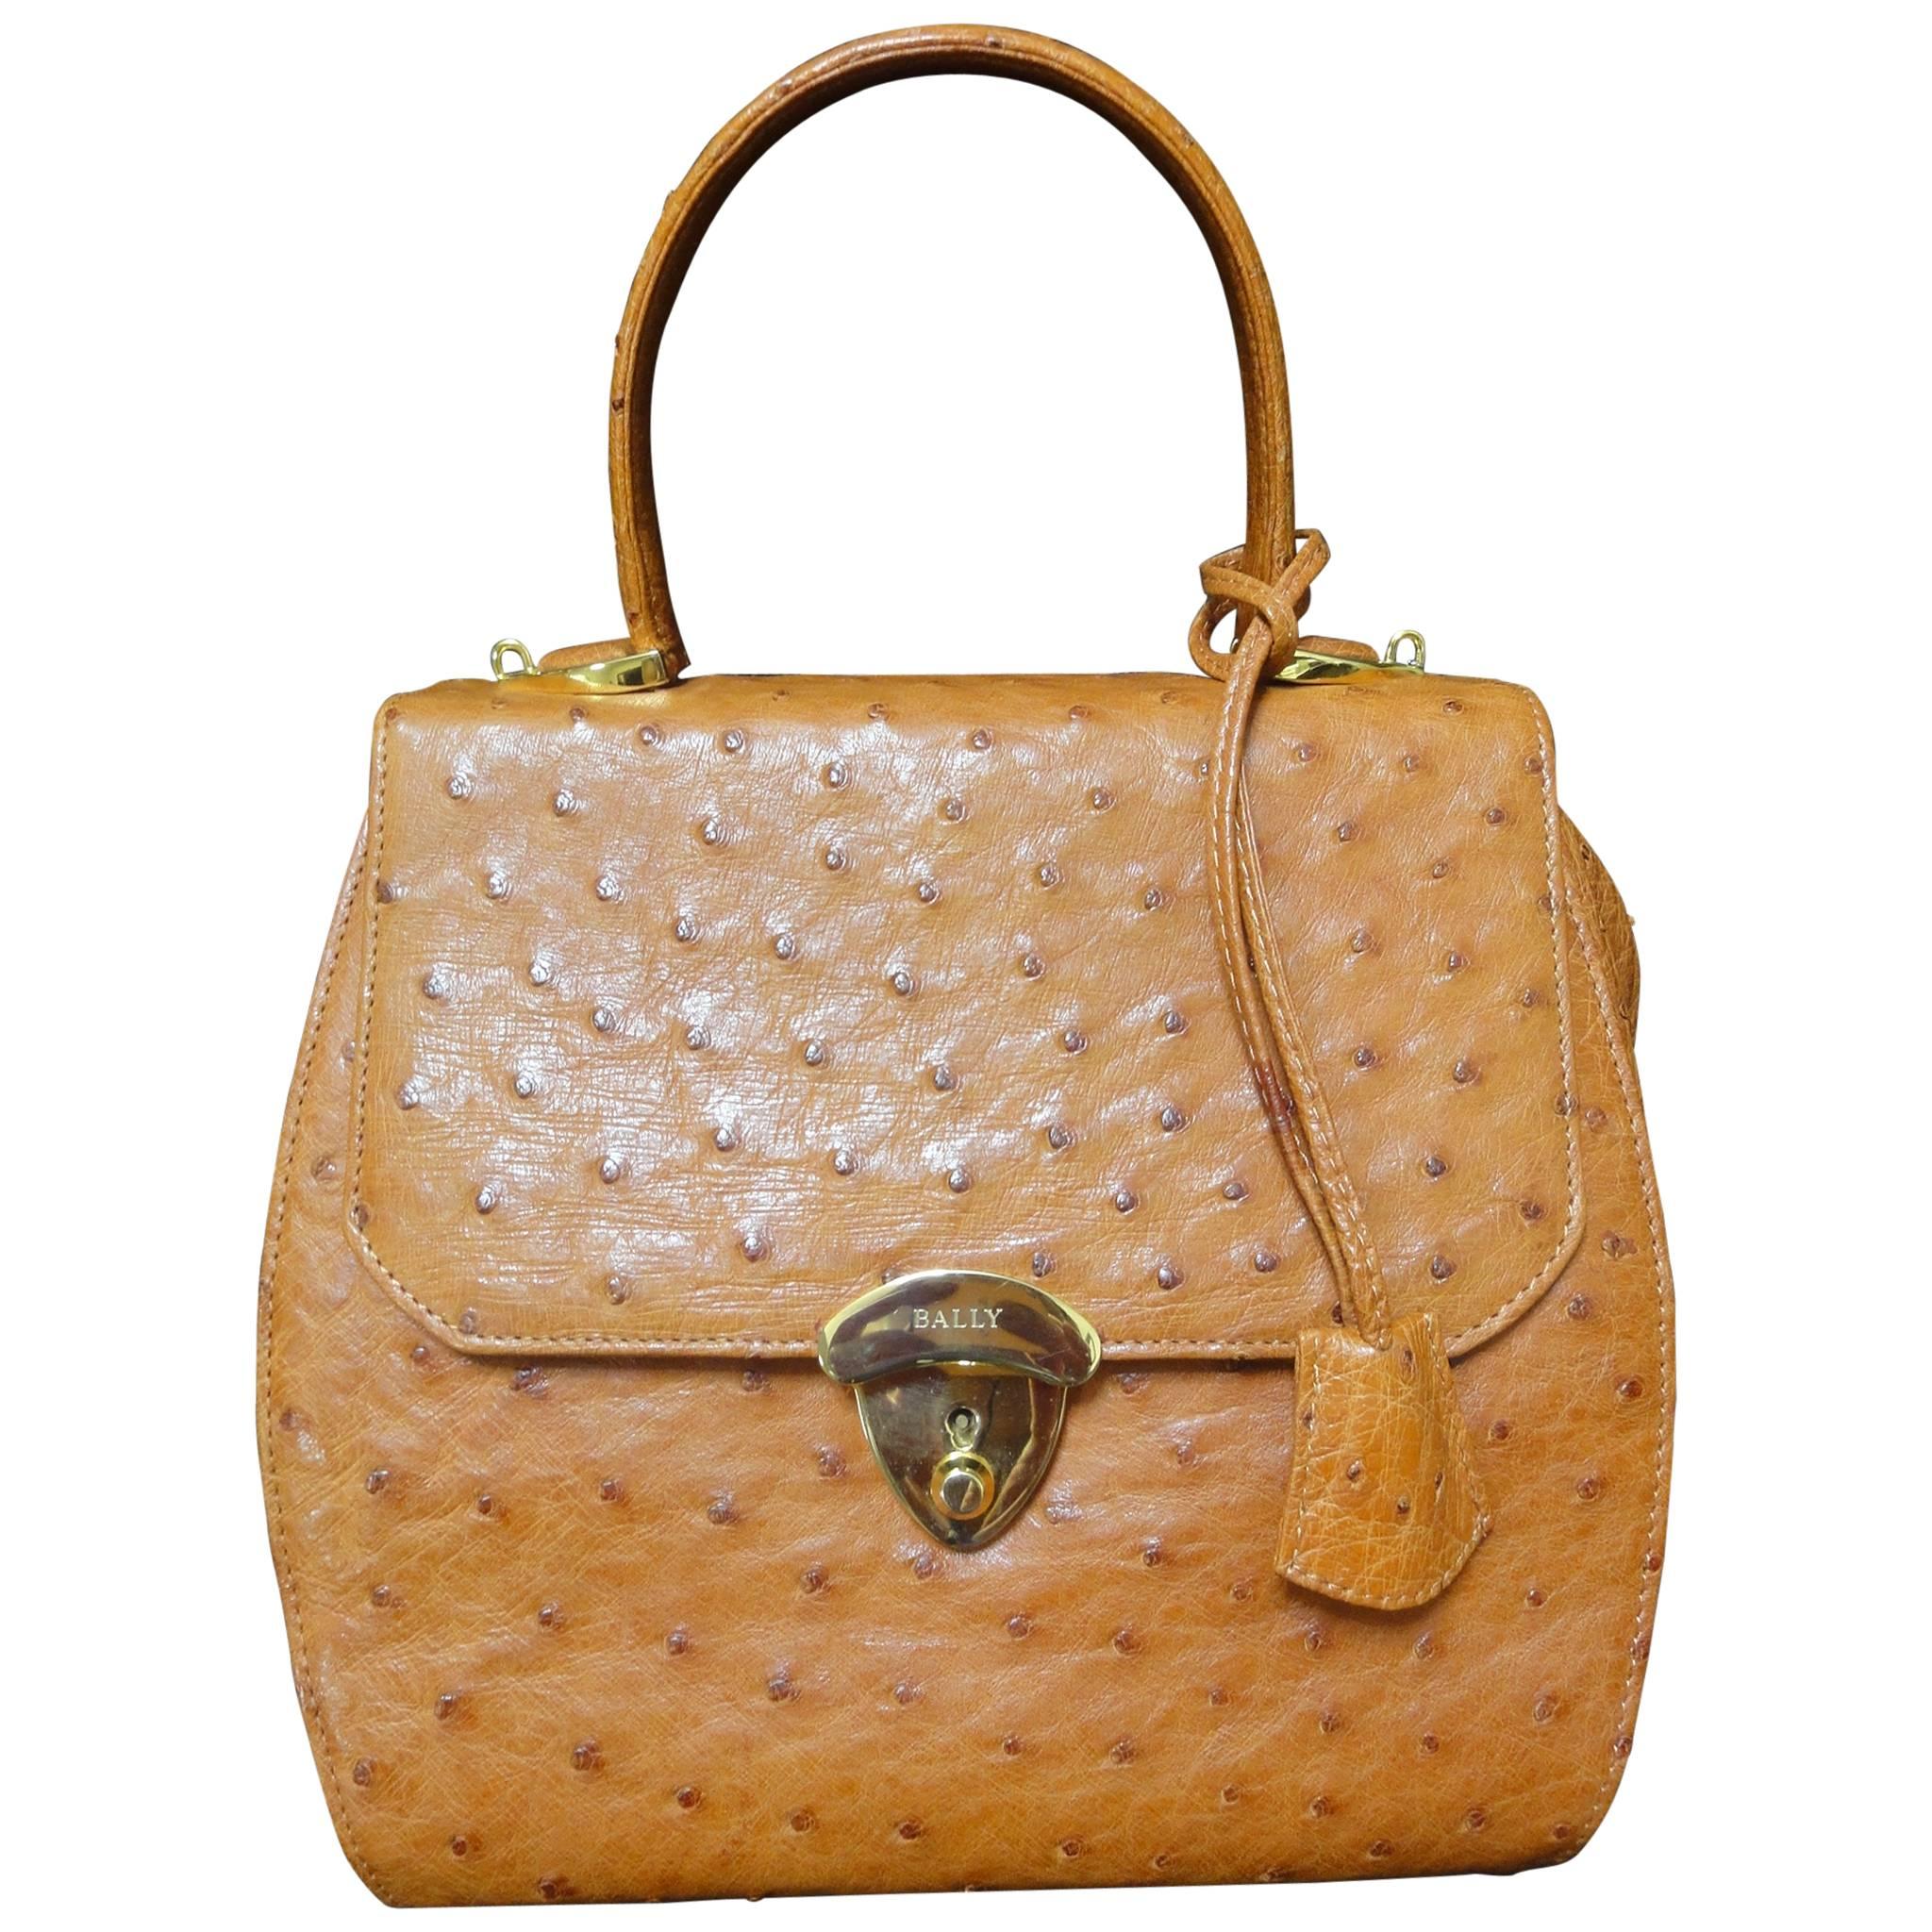 MINT. Vintage BALLY genuine ostrich leather orange brown handbag with strap. For Sale